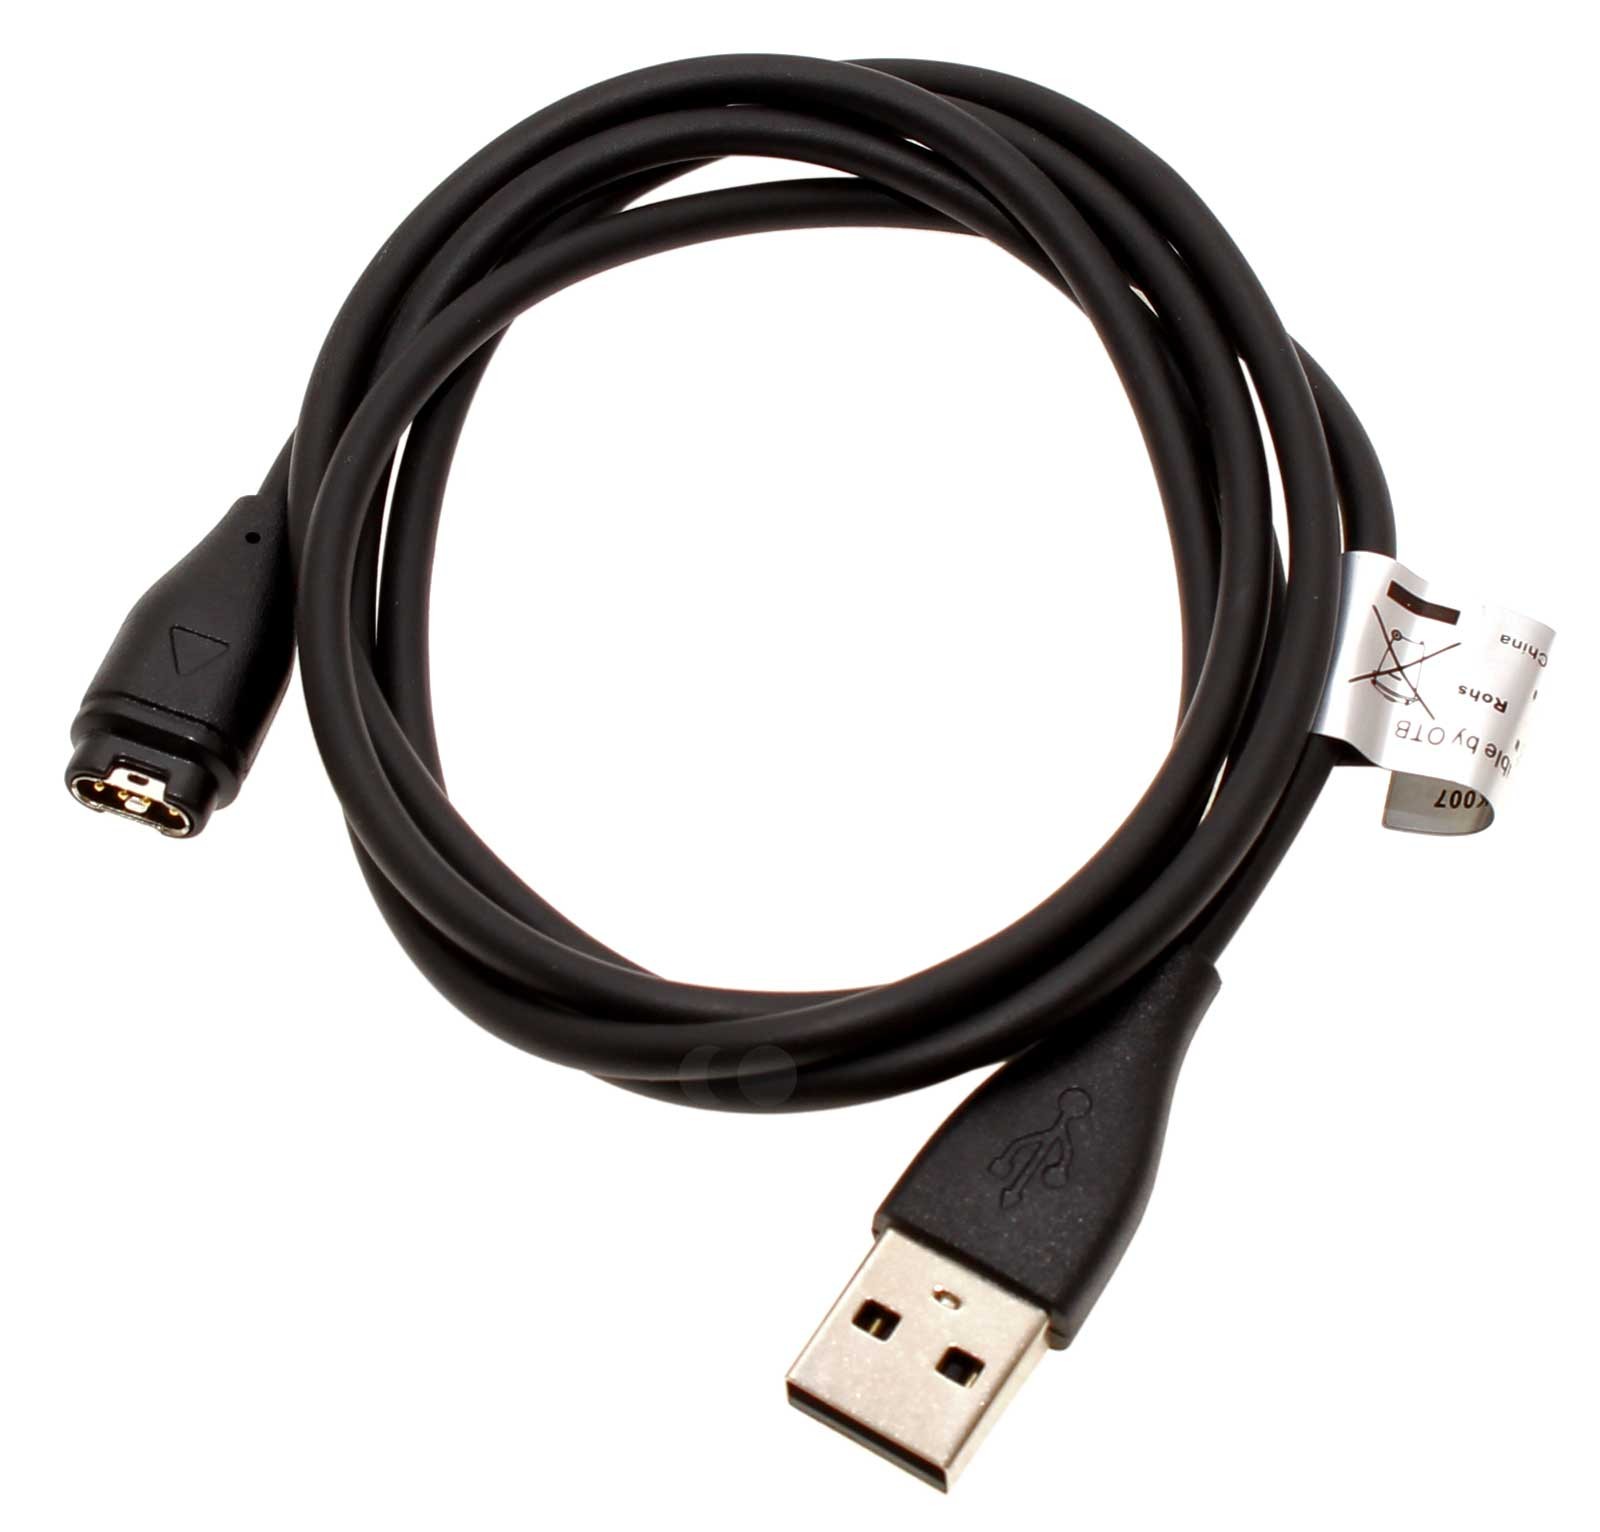 USB Ladekabel Datenkabel für Garmin Approach S60 X10 fenix 5 vivoactive 3 Foreru 